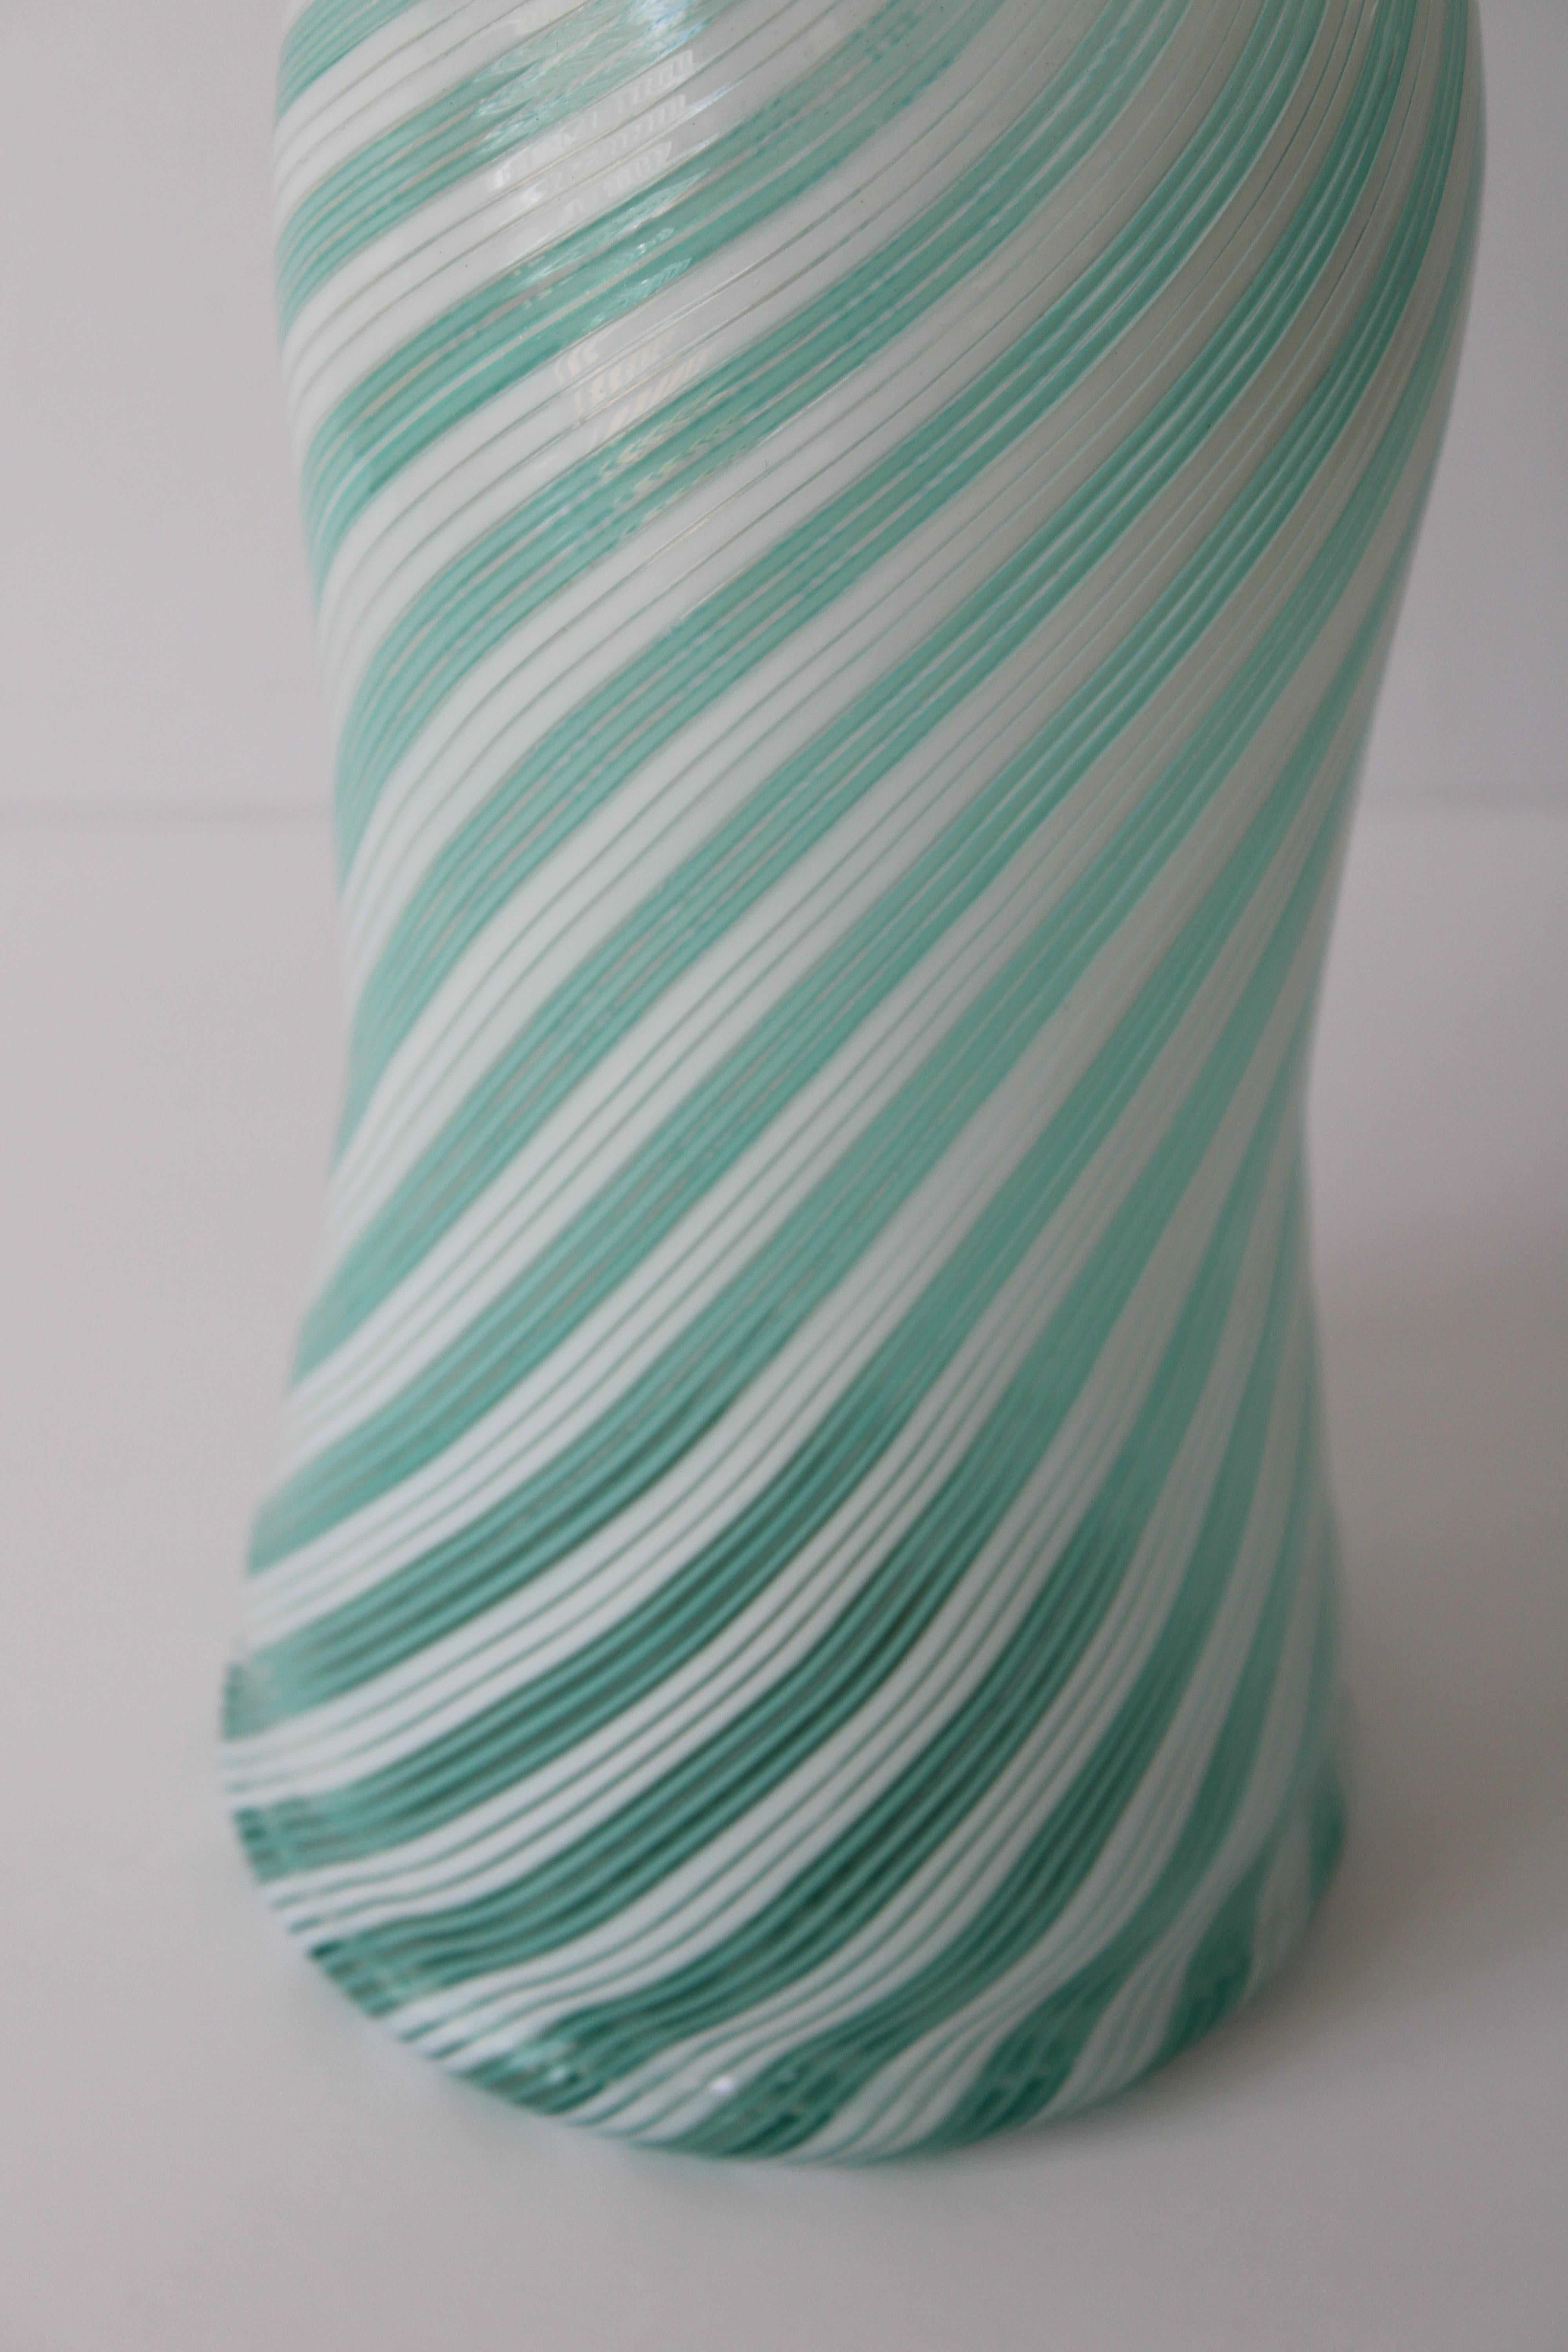 Seguso Murano Glass Vase For Sale 5